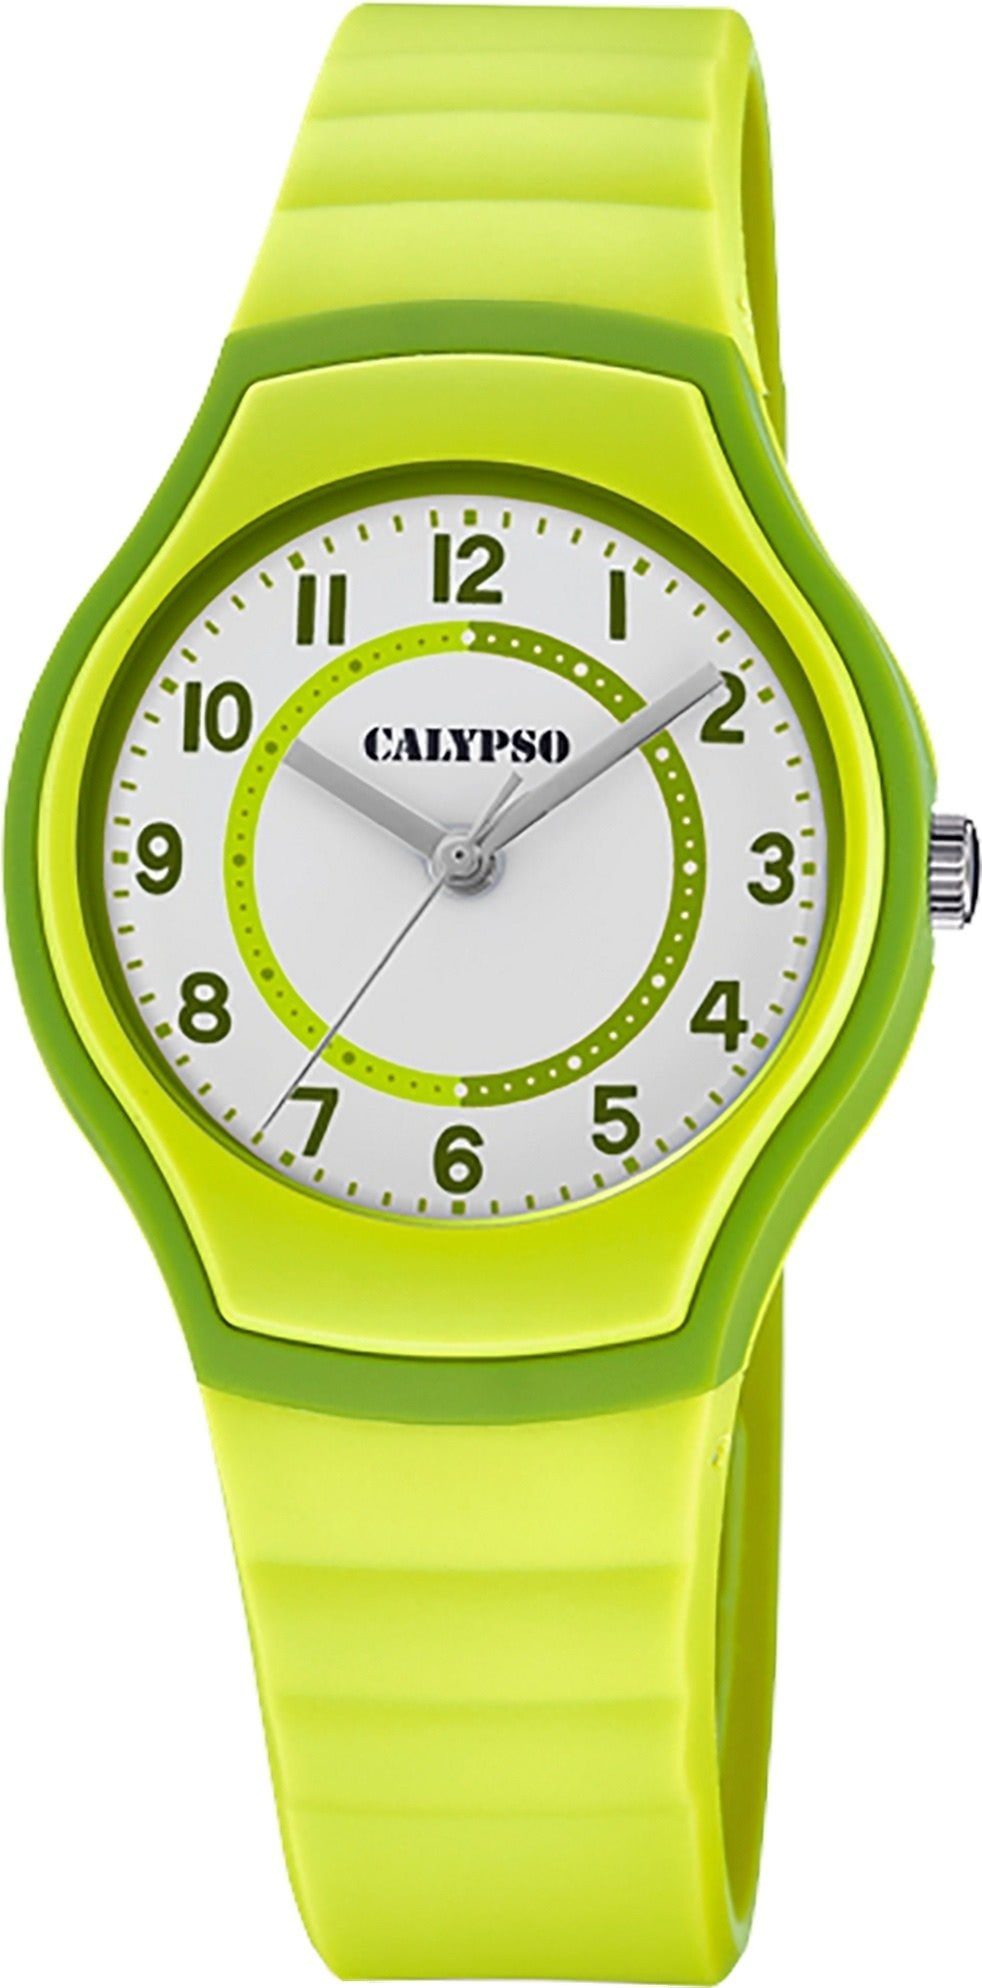 Uhr mittel Jugenduhr WATCHES Calypso (ca. Jugend Quarzuhr Analog K5806/4, Kunststoffarmband, rund, CALYPSO Fashion-Style 31mm),